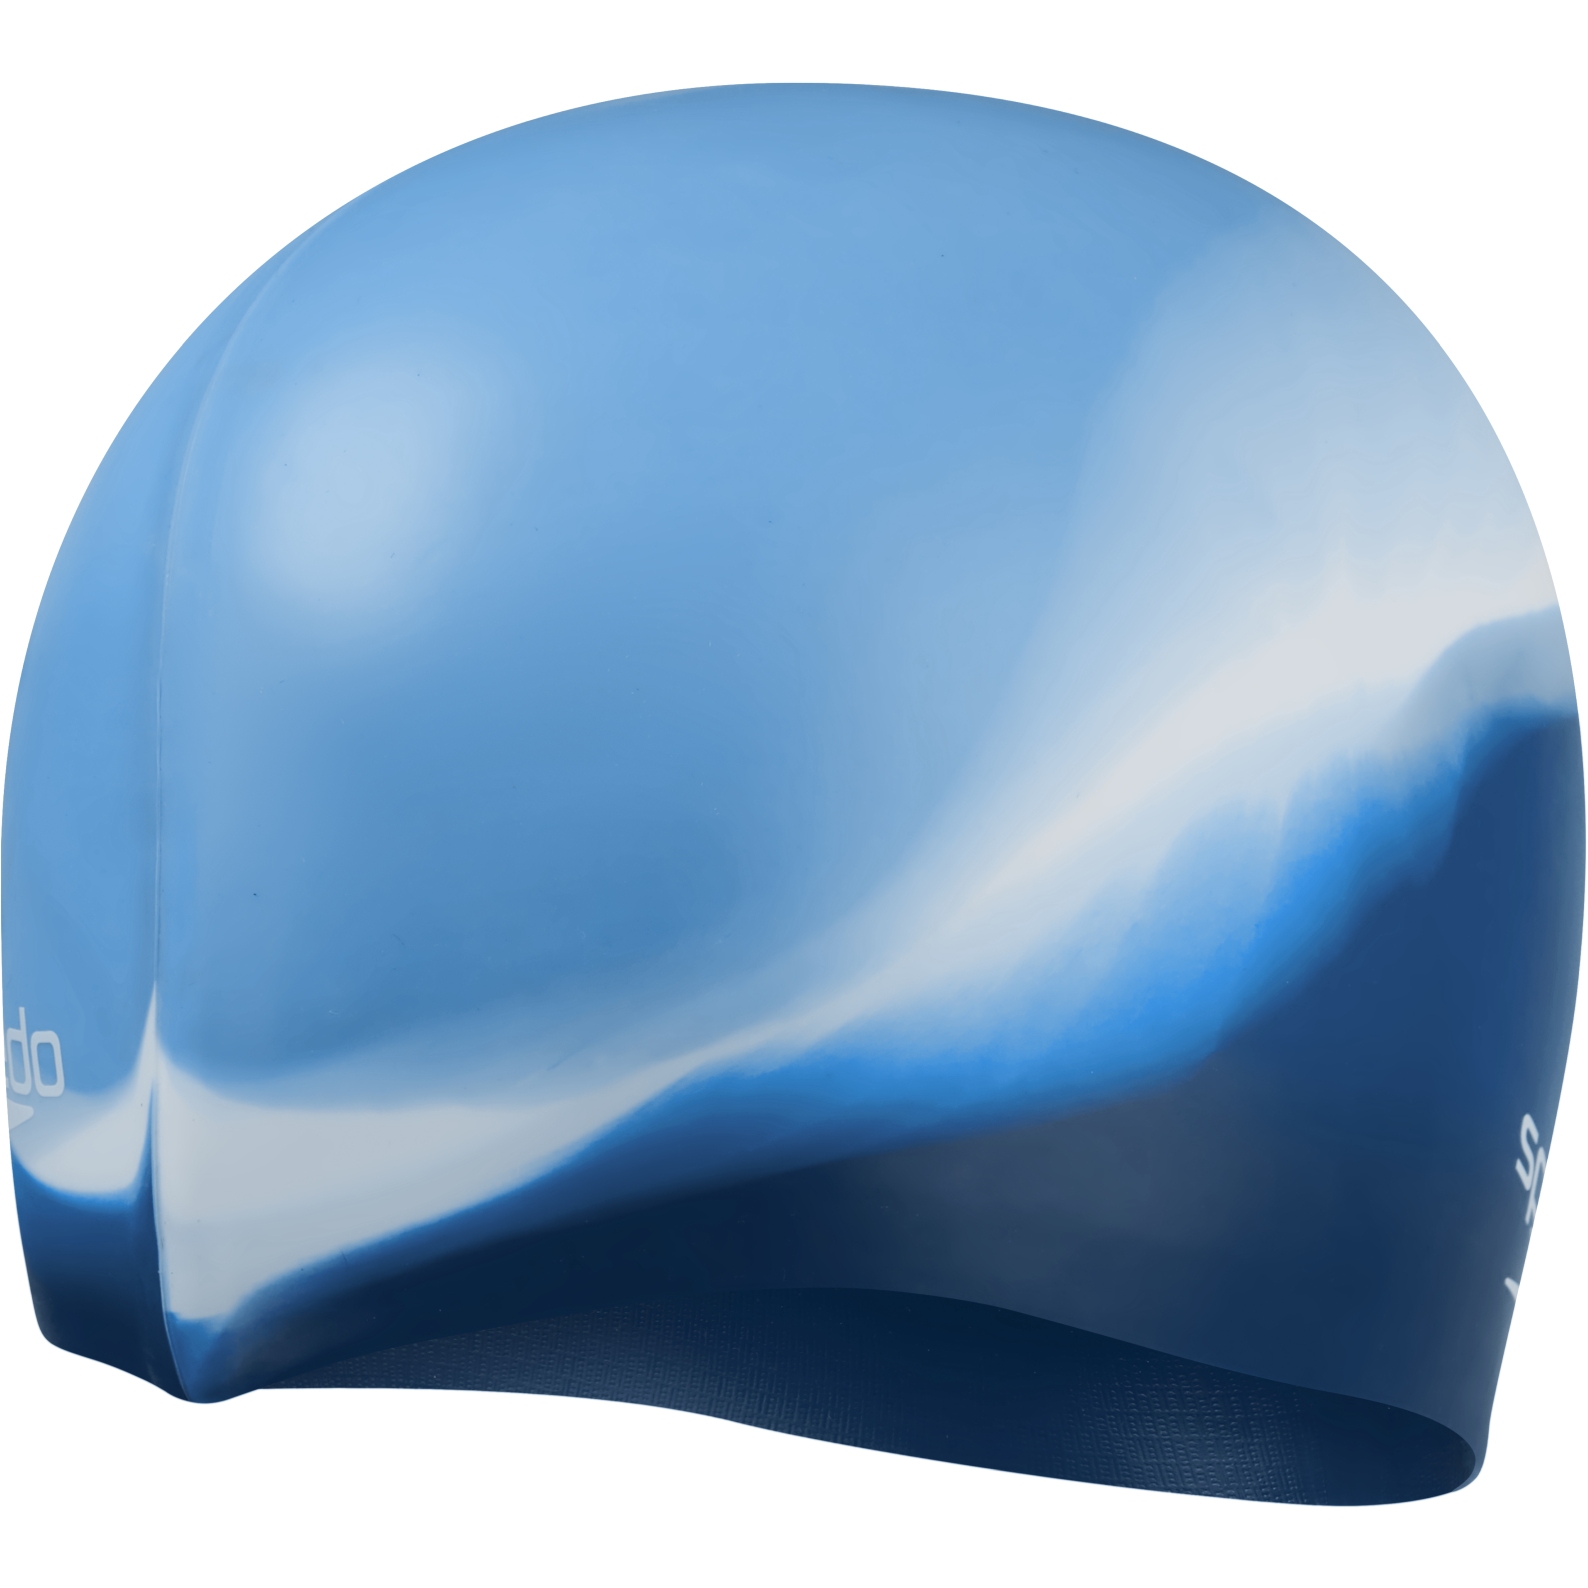 Picture of Speedo Multi Colour Silicone Cap - blissful blue/aegean blue/white